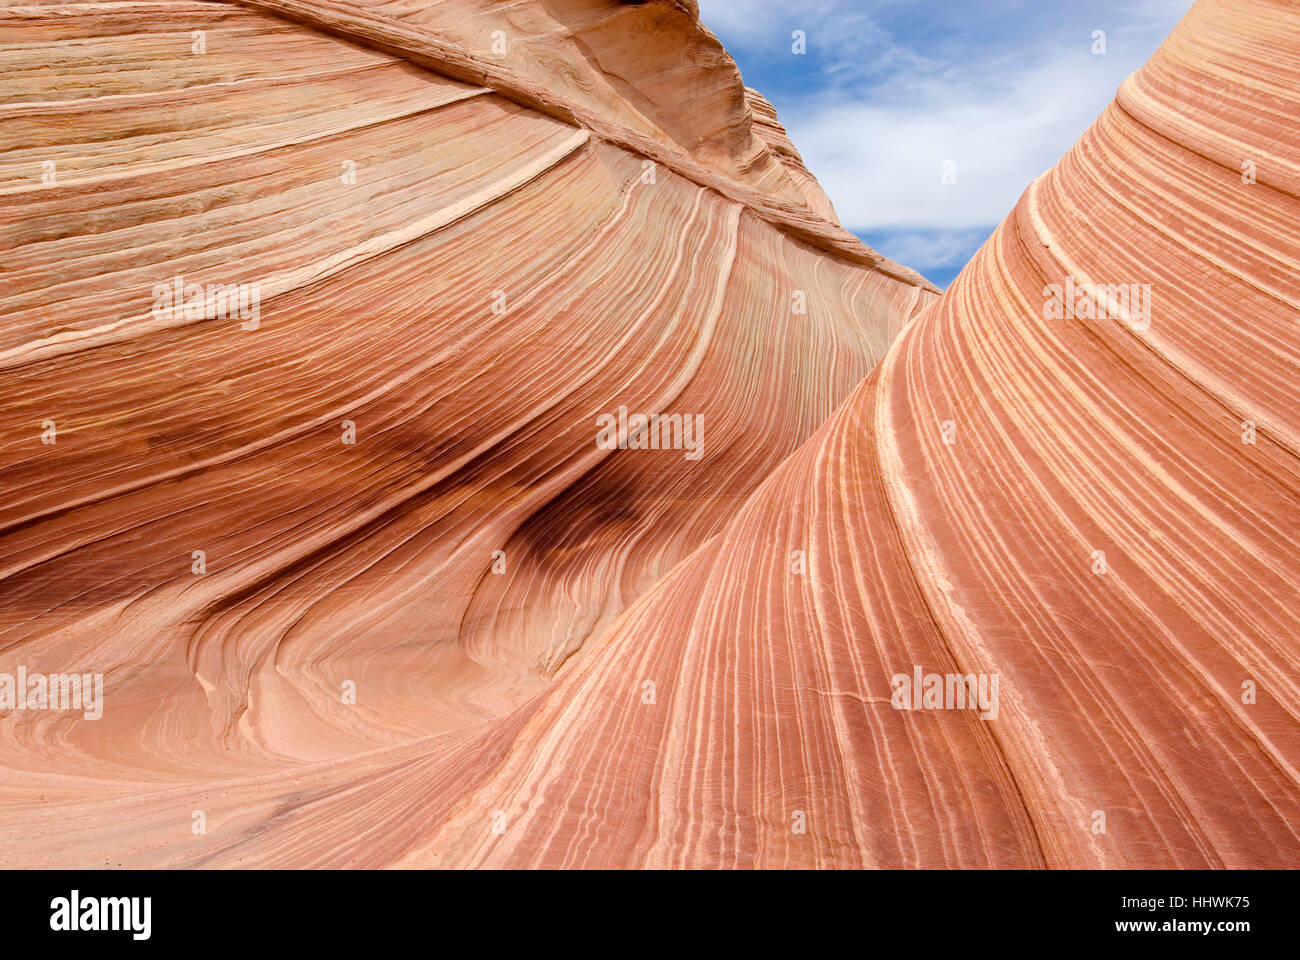 Die Welle, North Coyote Buttes, Vermilion Cliffs, Paria Canyon, Arizona, USA Stockfoto